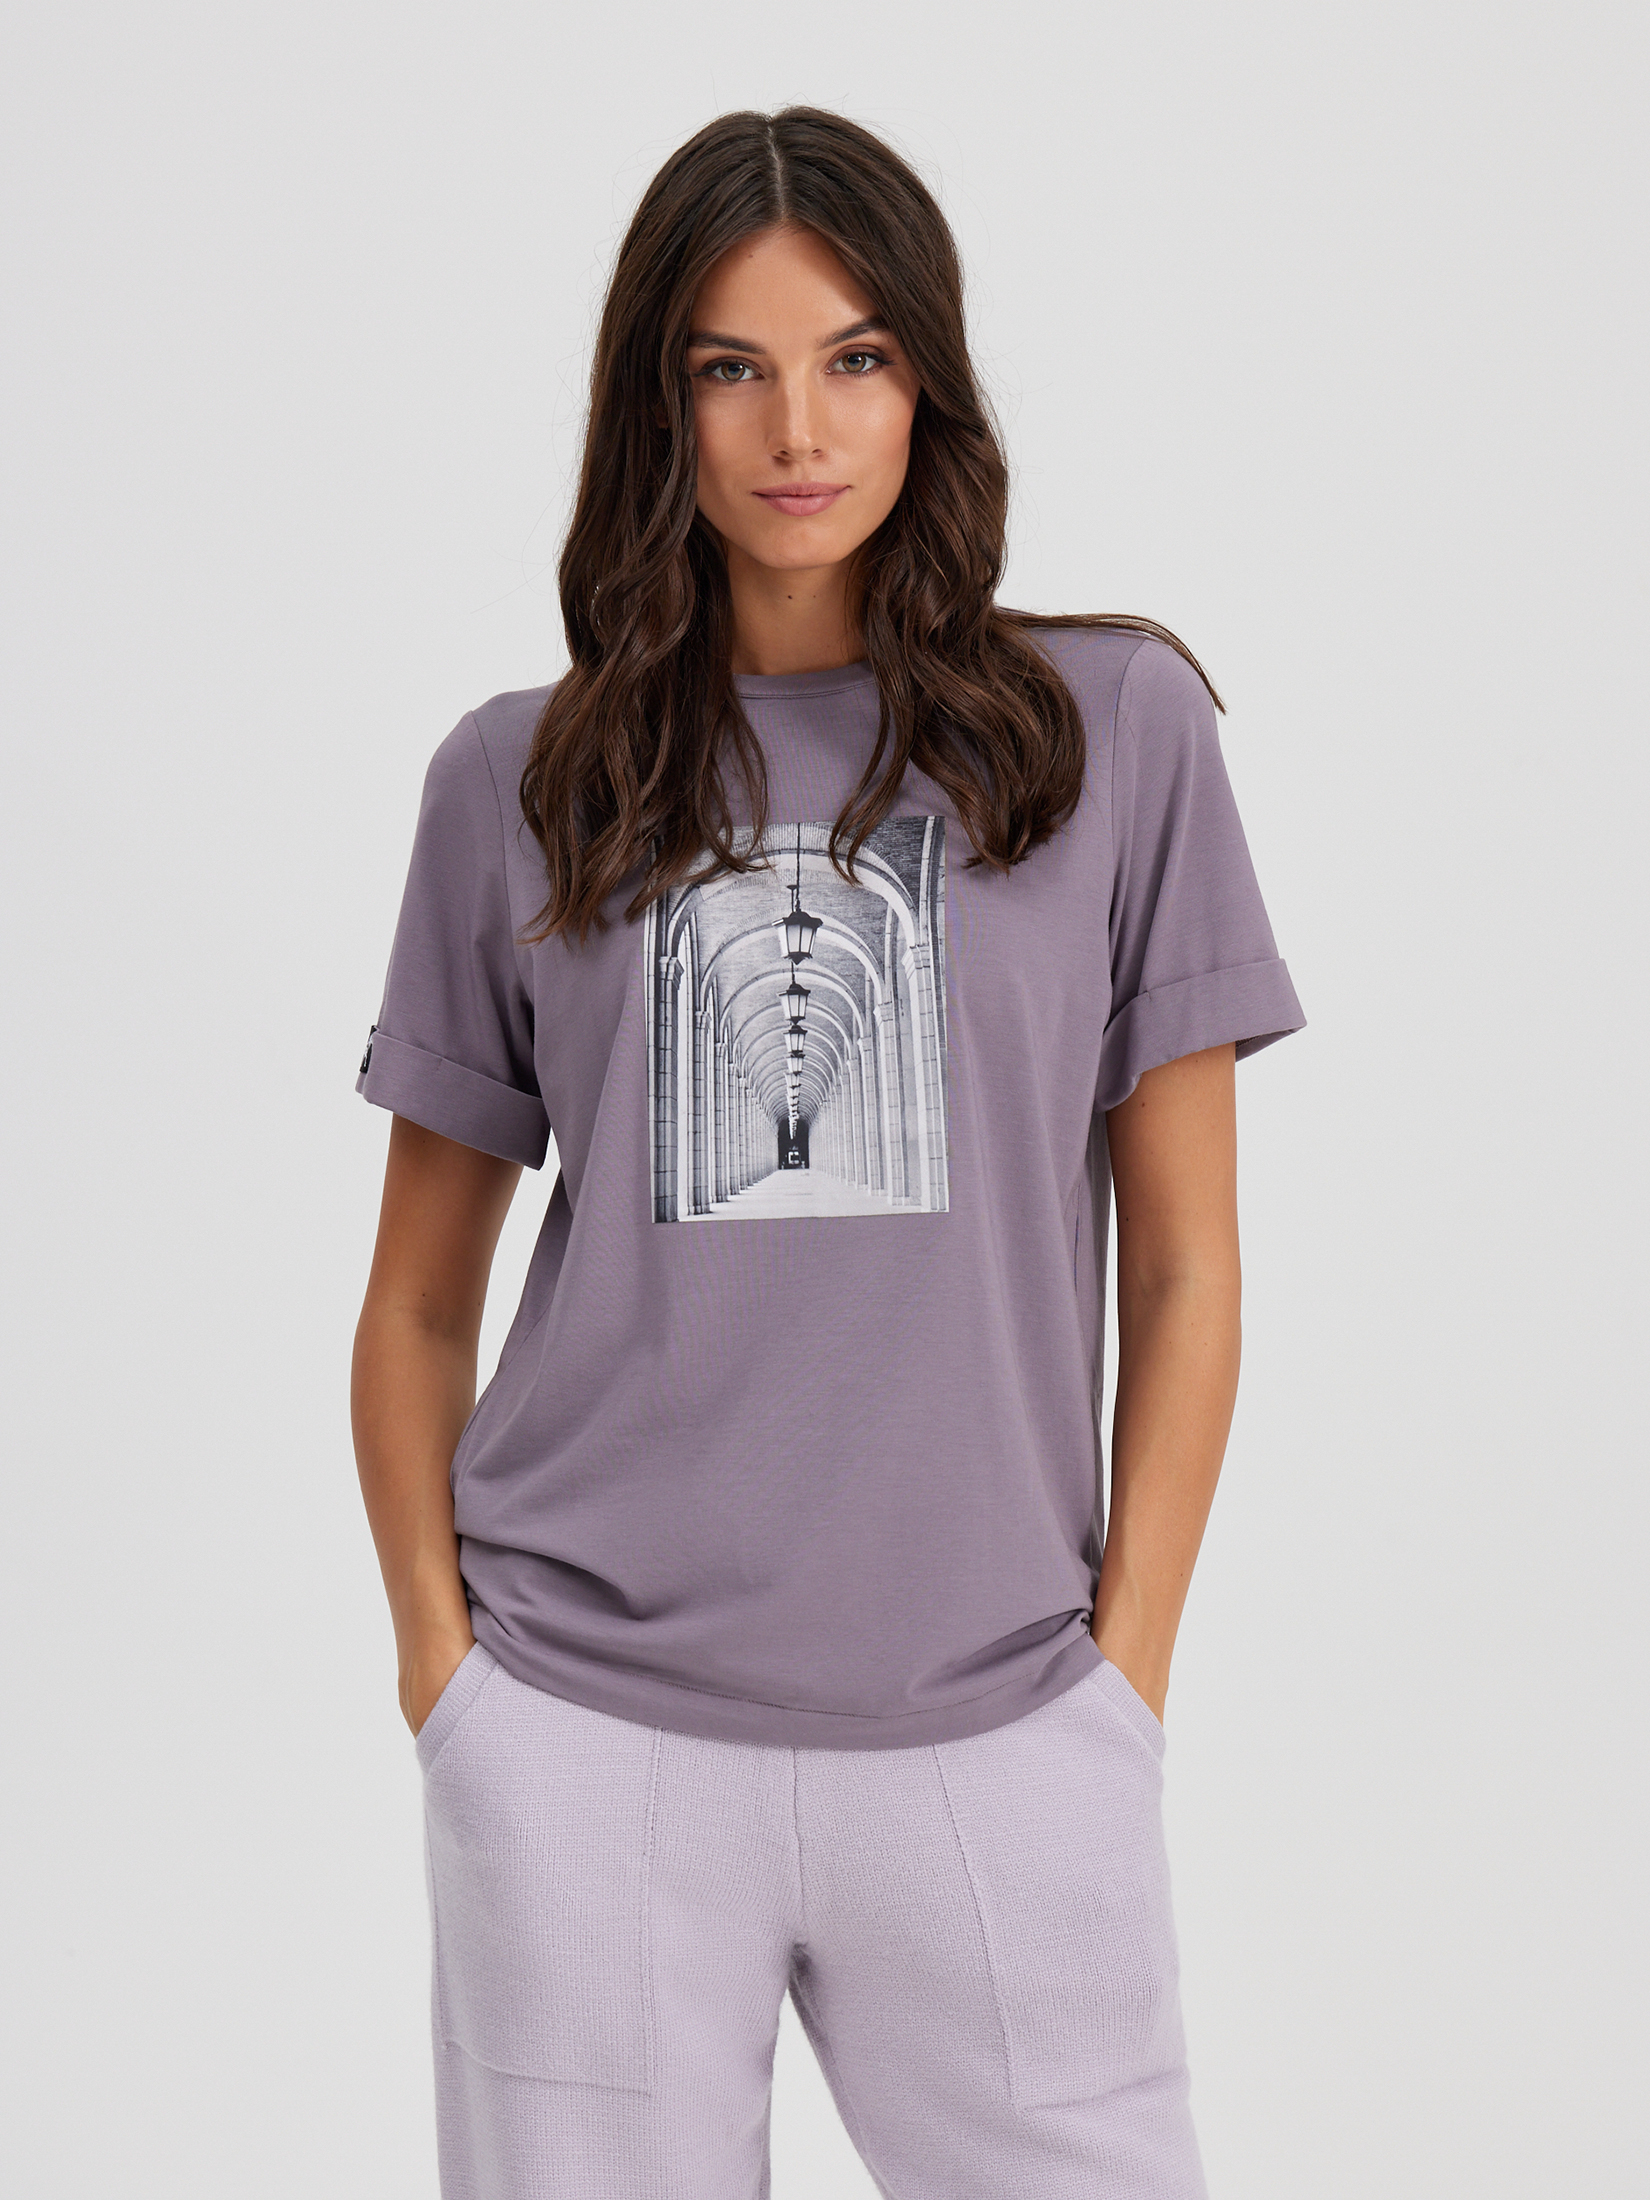 Футболка женская серый меланж футболка sol s размер l фиолетовый